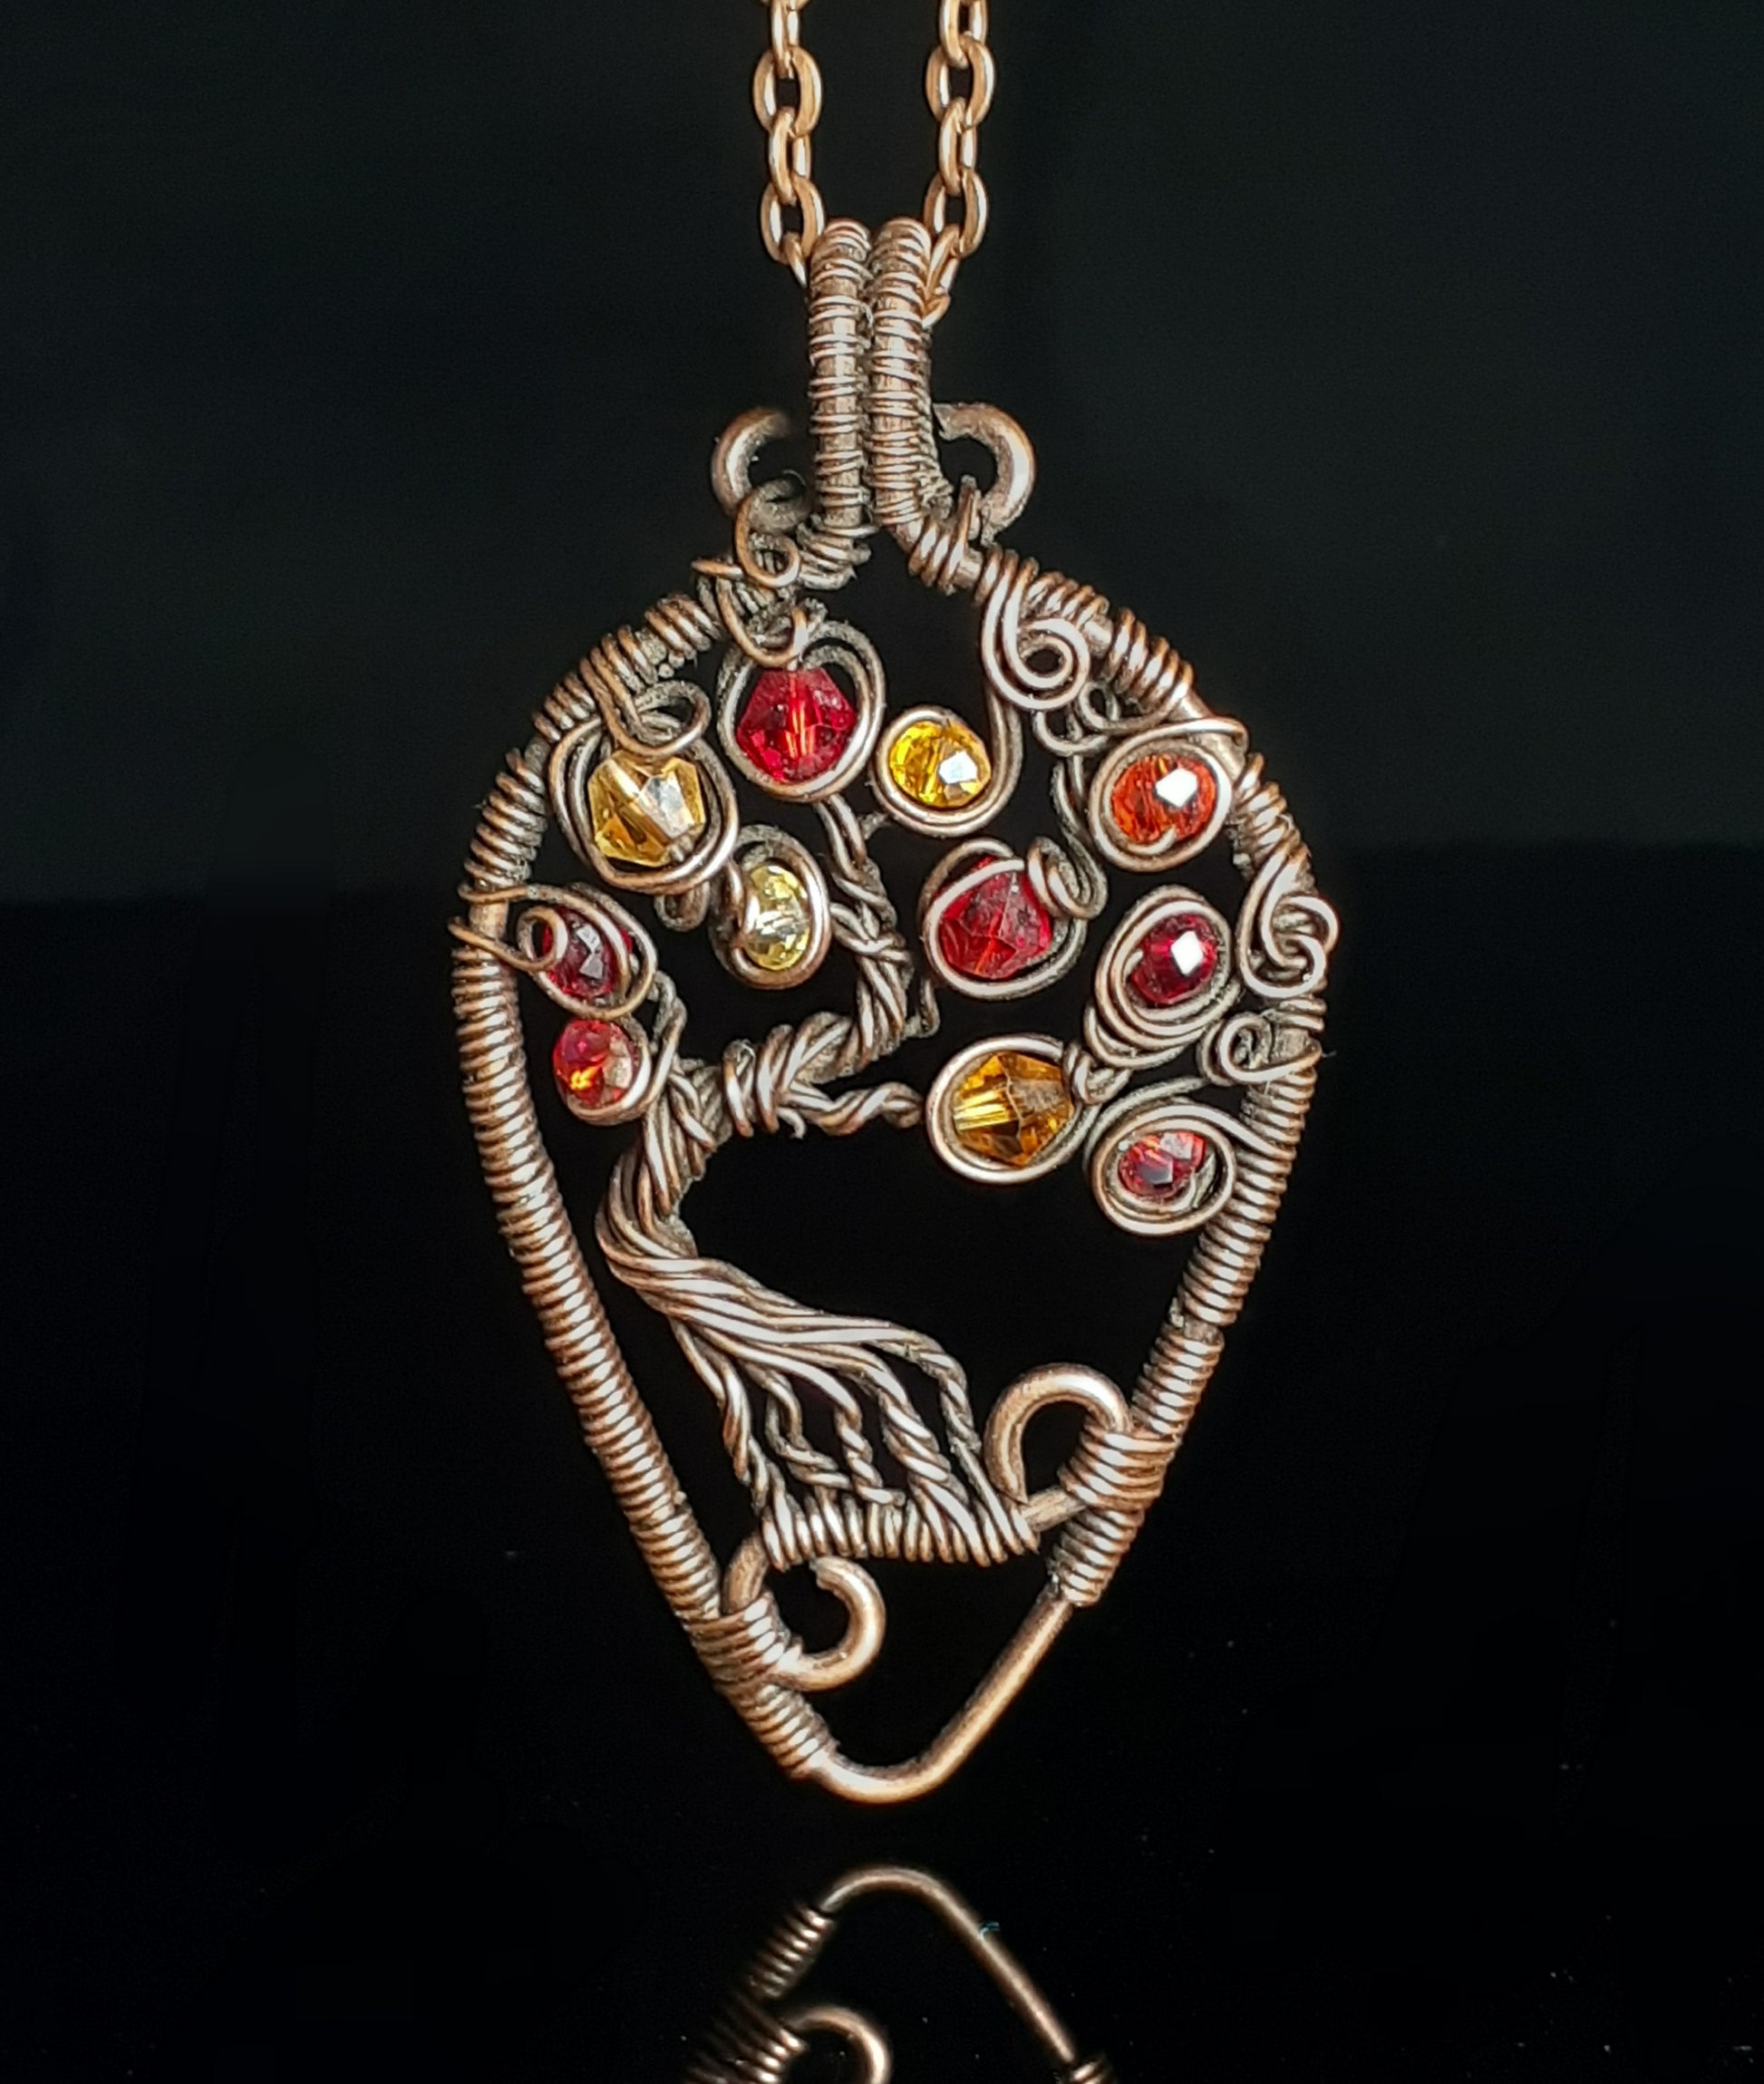 Autumn Leaf Tree of Life Pendant Artist: Lindsey Griffin Swarovski beads in   oxidized copper  2.25" x 1.0"